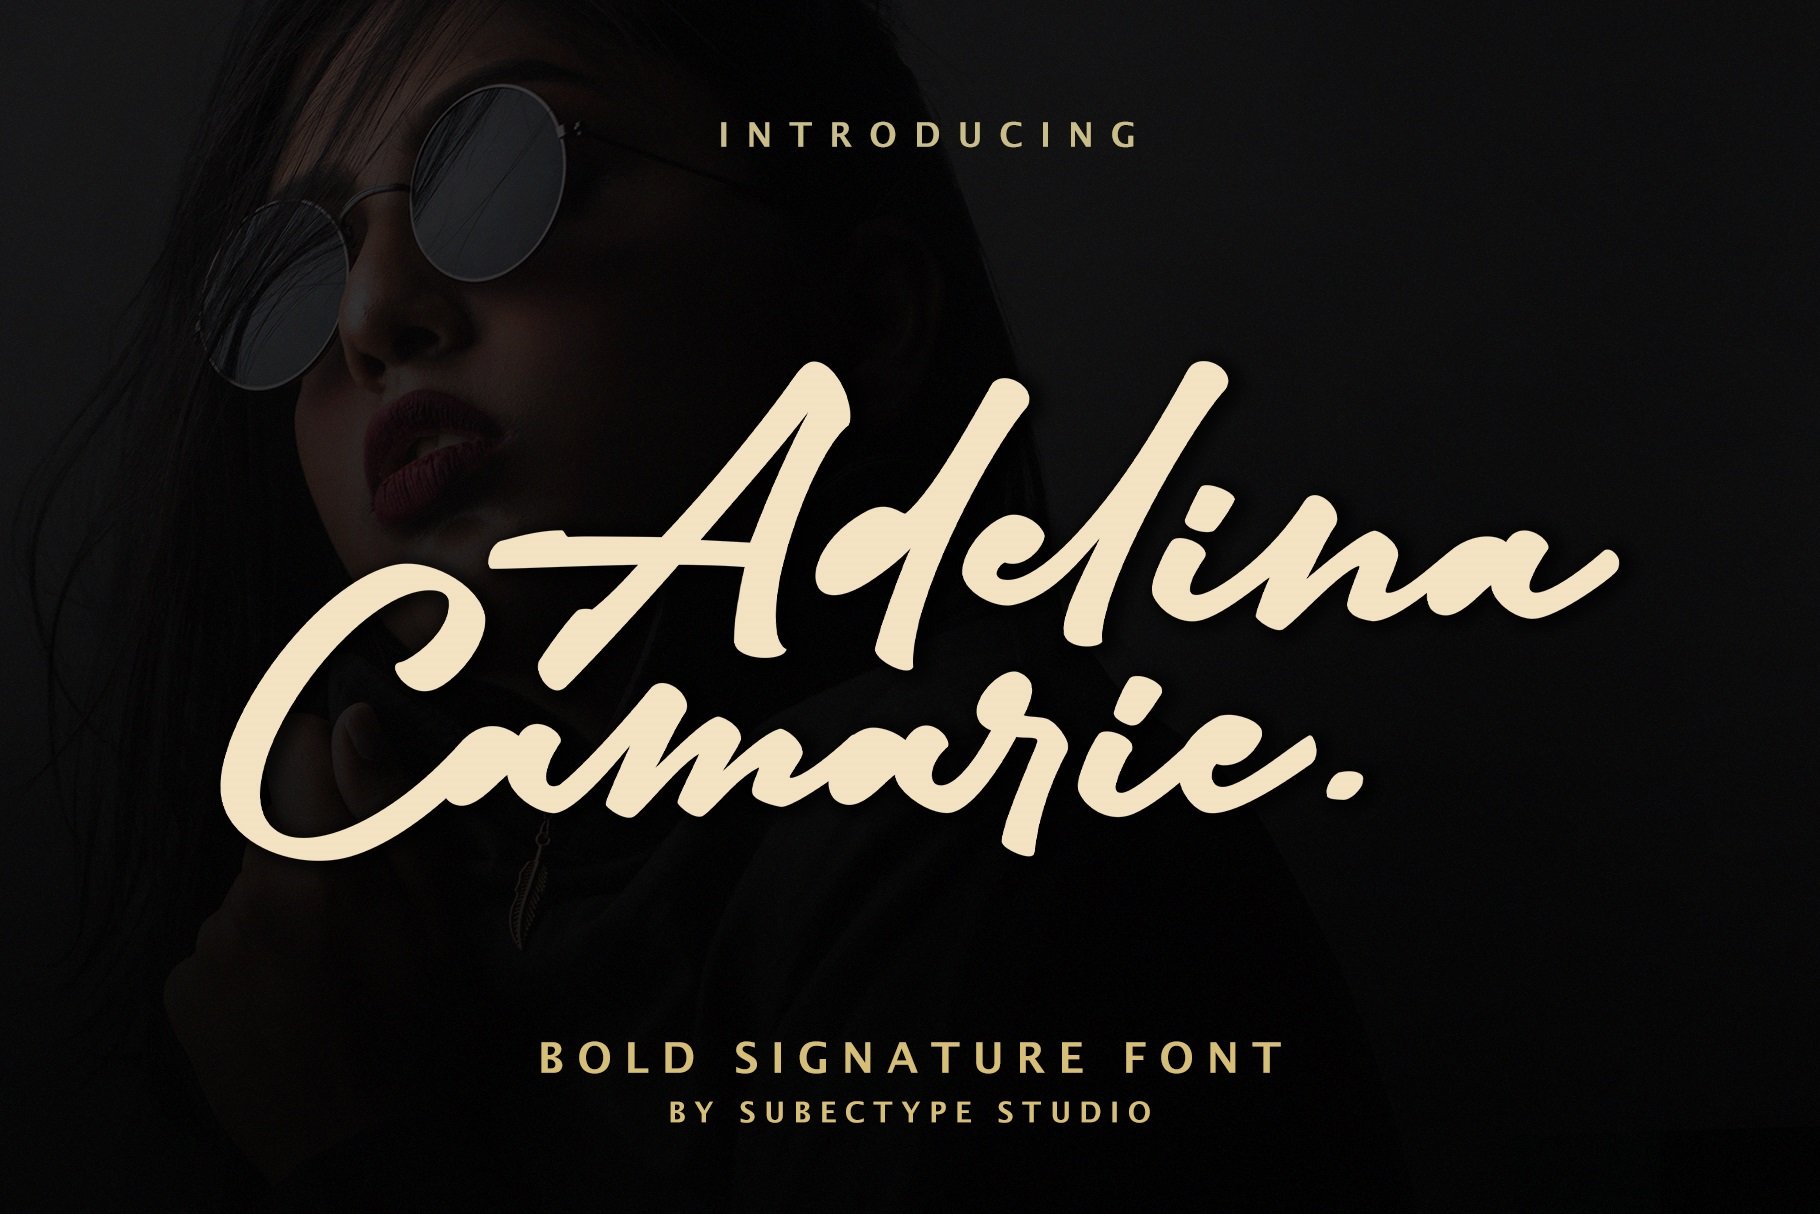 Adelina Camarie - Bold Signature Font